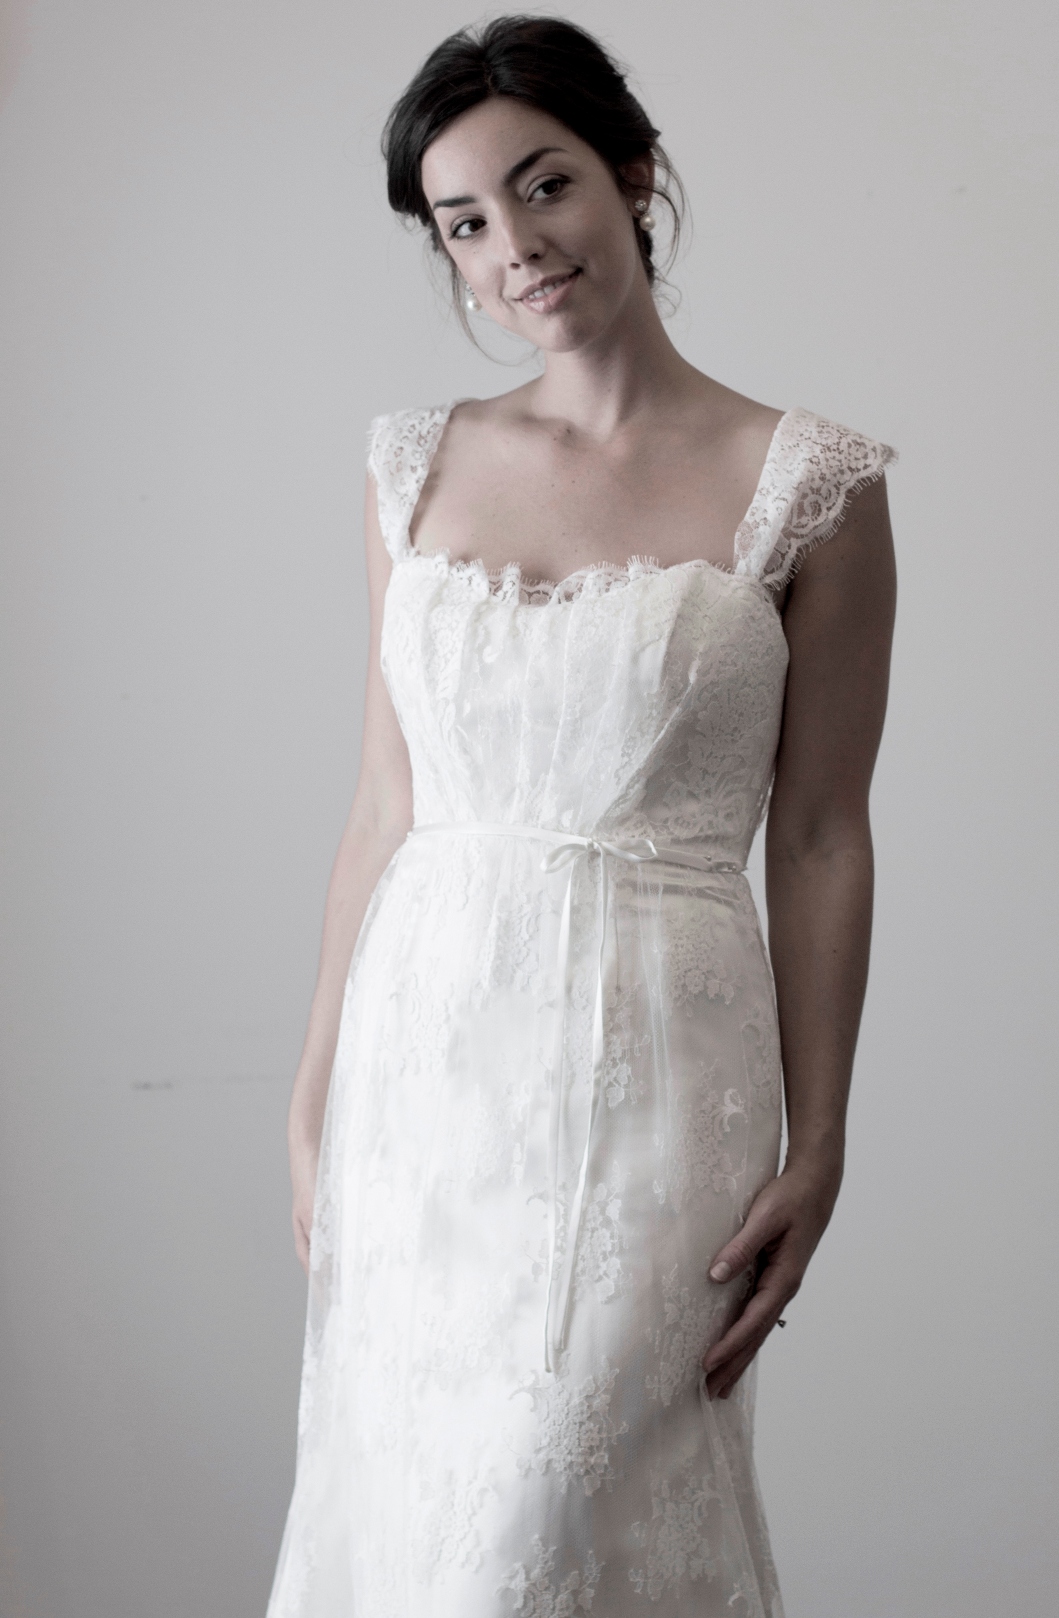 Rose & Delilah's Primrose Wedding Dress